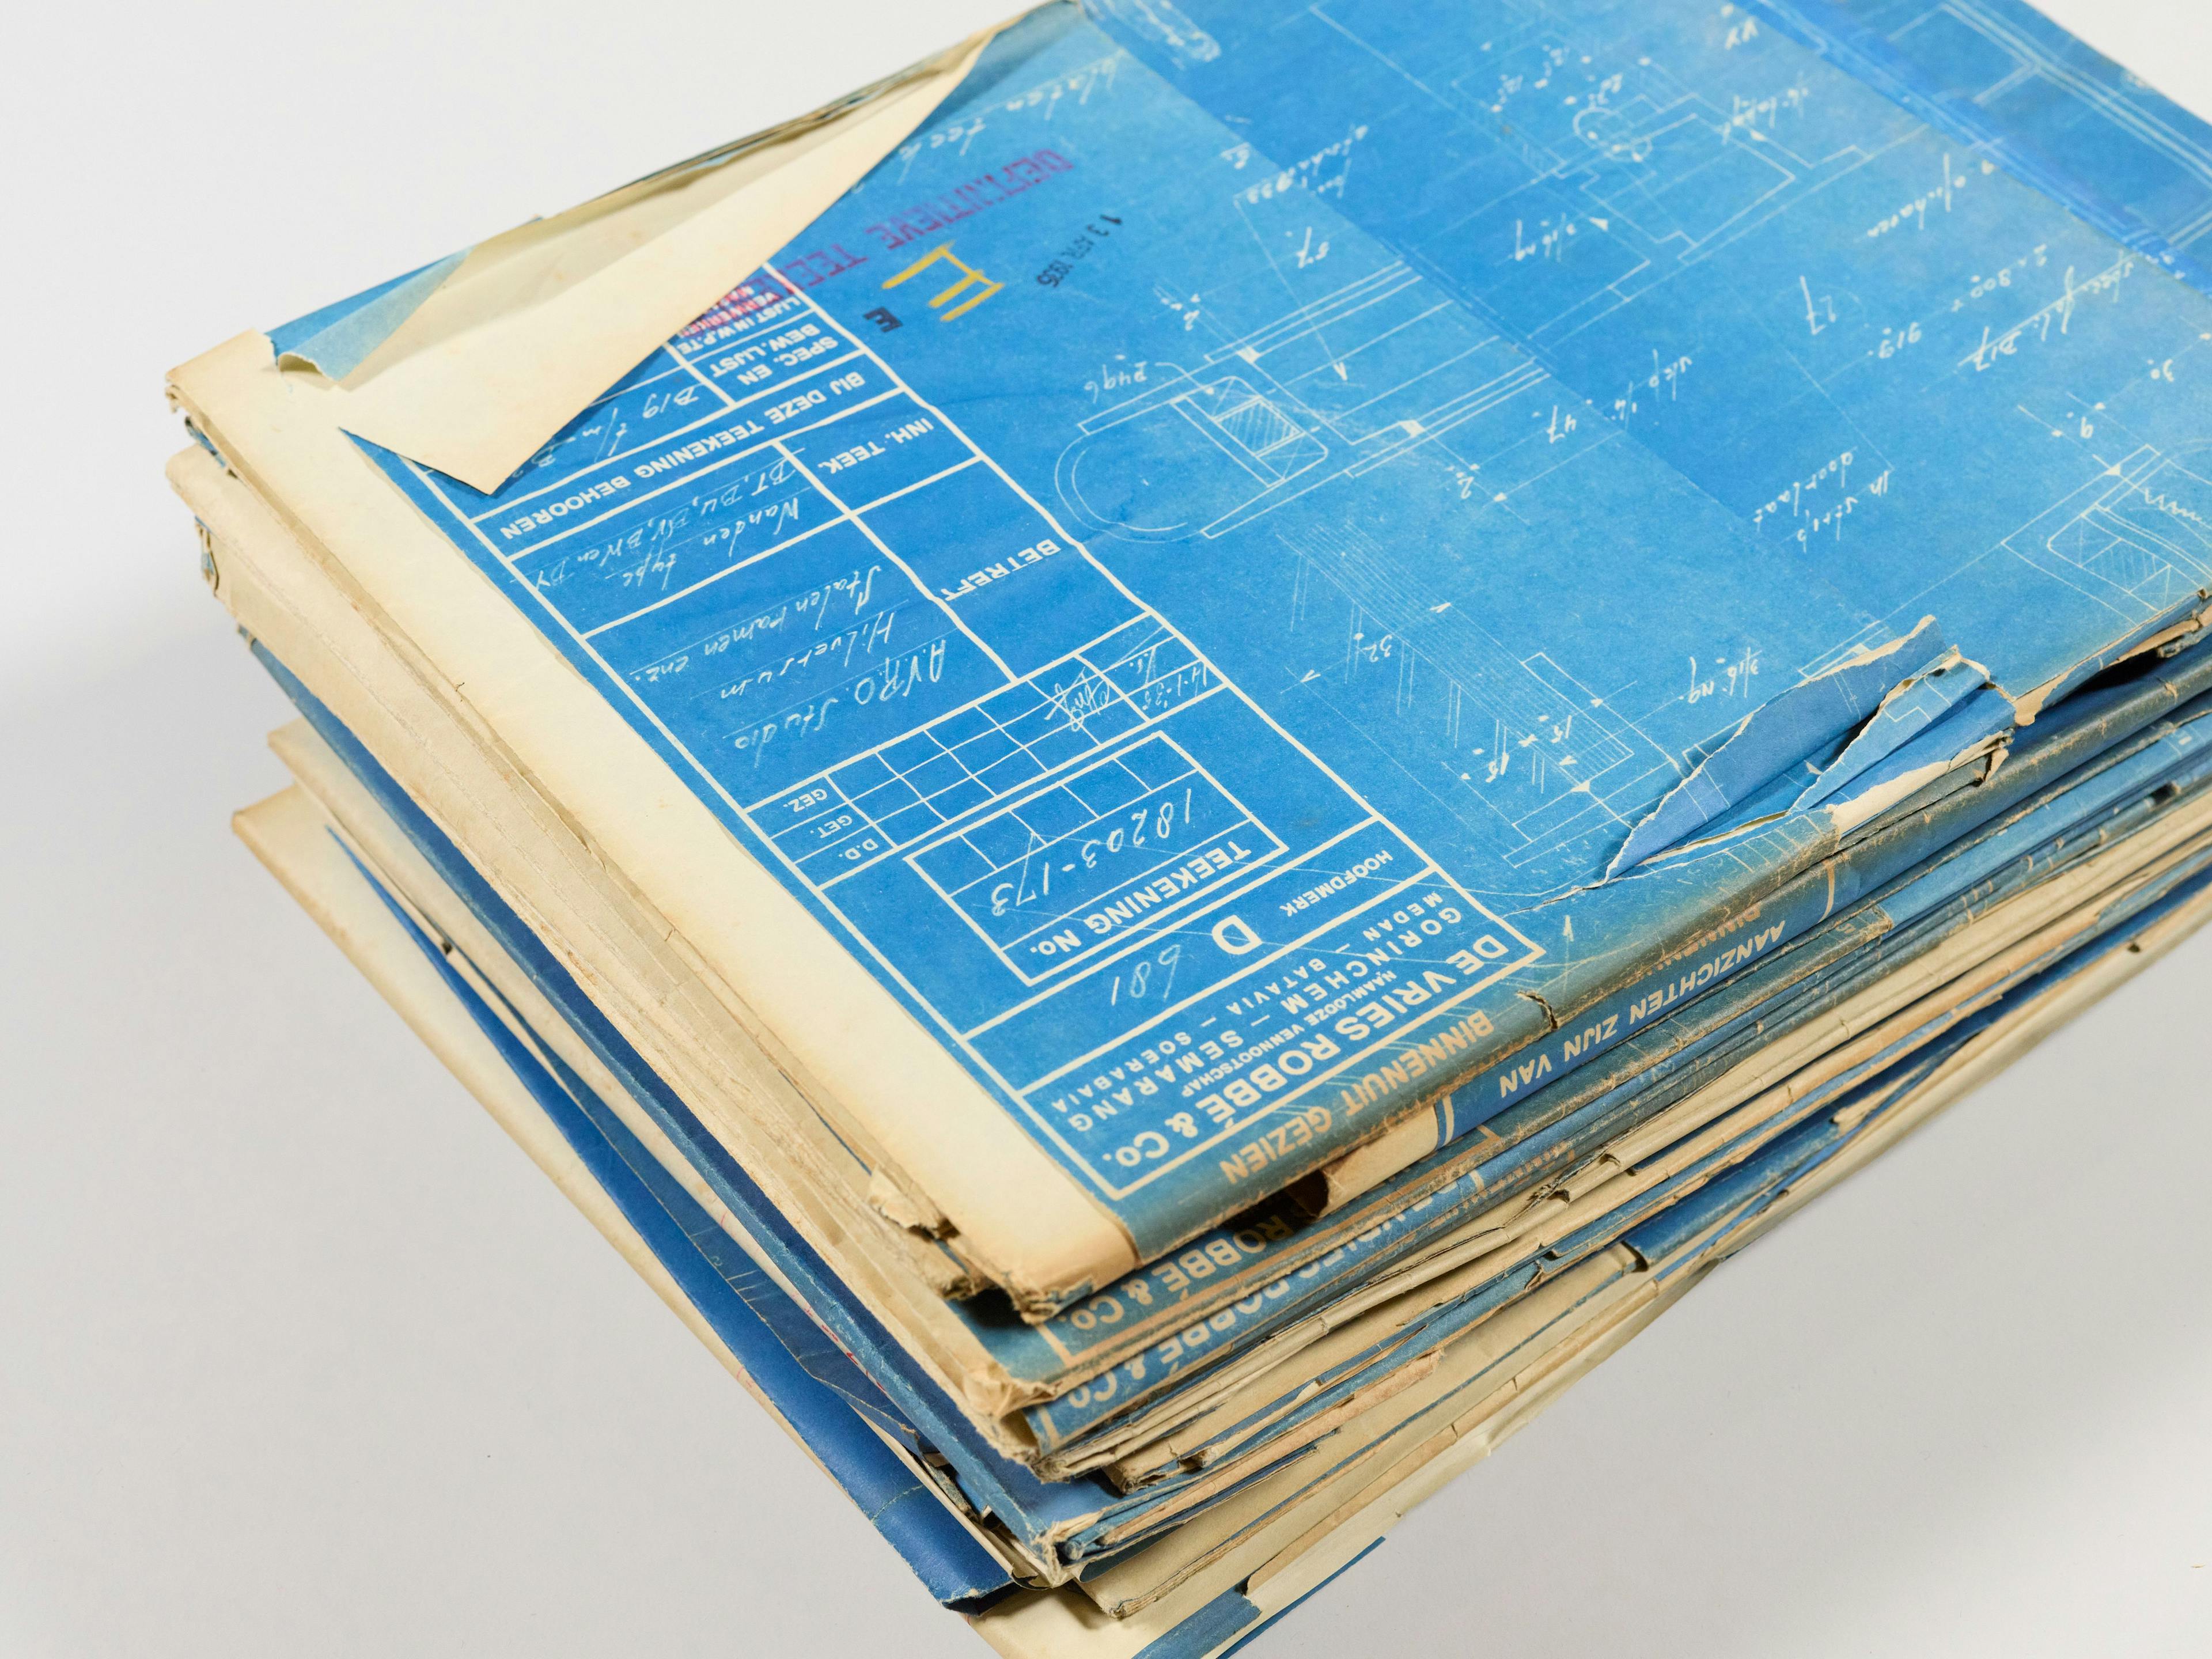 The edges of this stack of blueprints have been damaged by sliding and bumping. Blueprints, 1935, Nieuwe Instituut Collection, Bureaus Merkelbach, Elling & Karsten Archive, MELKt11.1b. Photo Johannes Schwartz.